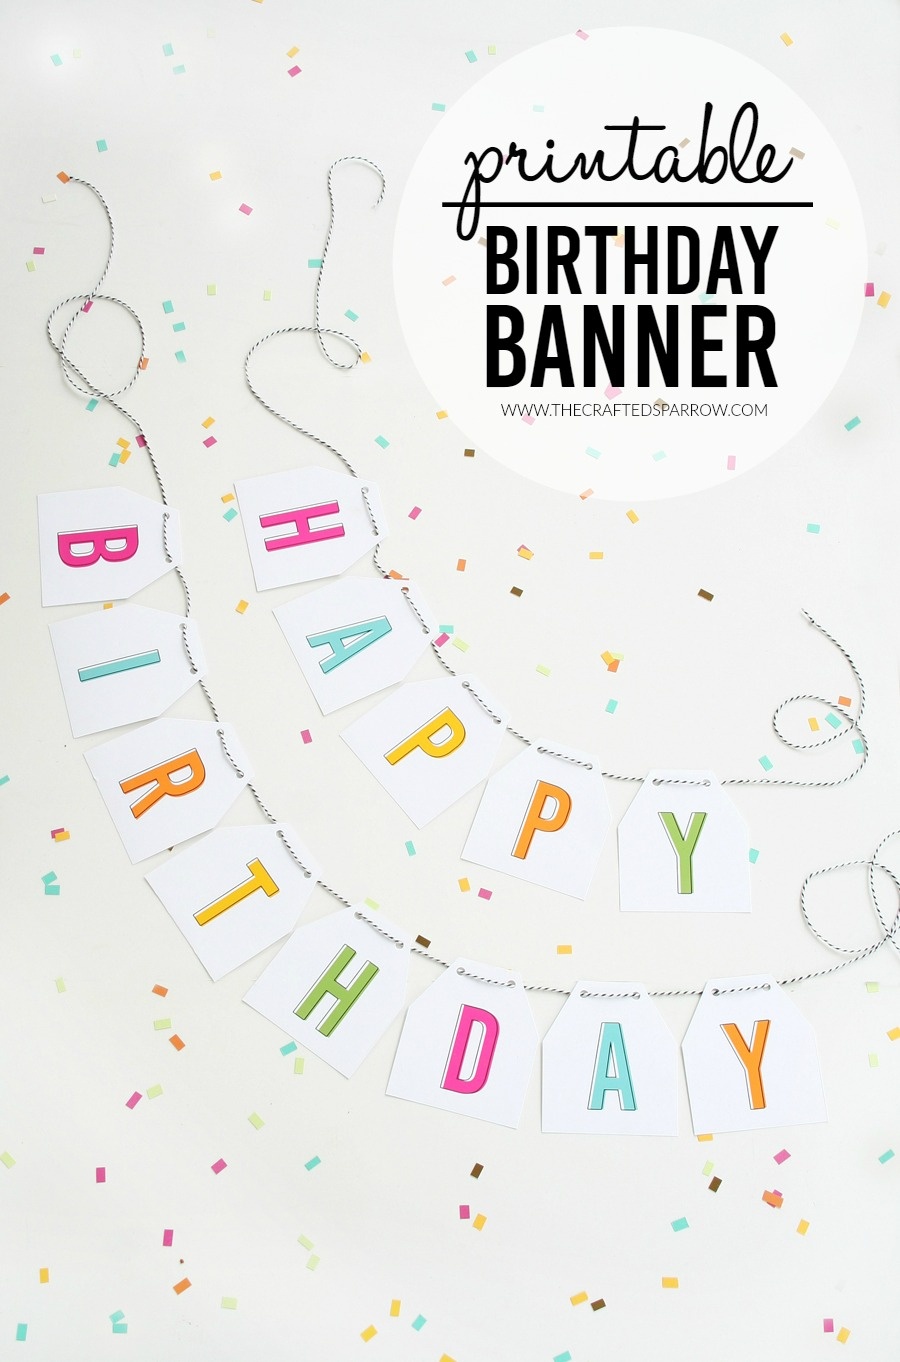 Free Printable Birthday Banner - Free Printable Happy Birthday Banner